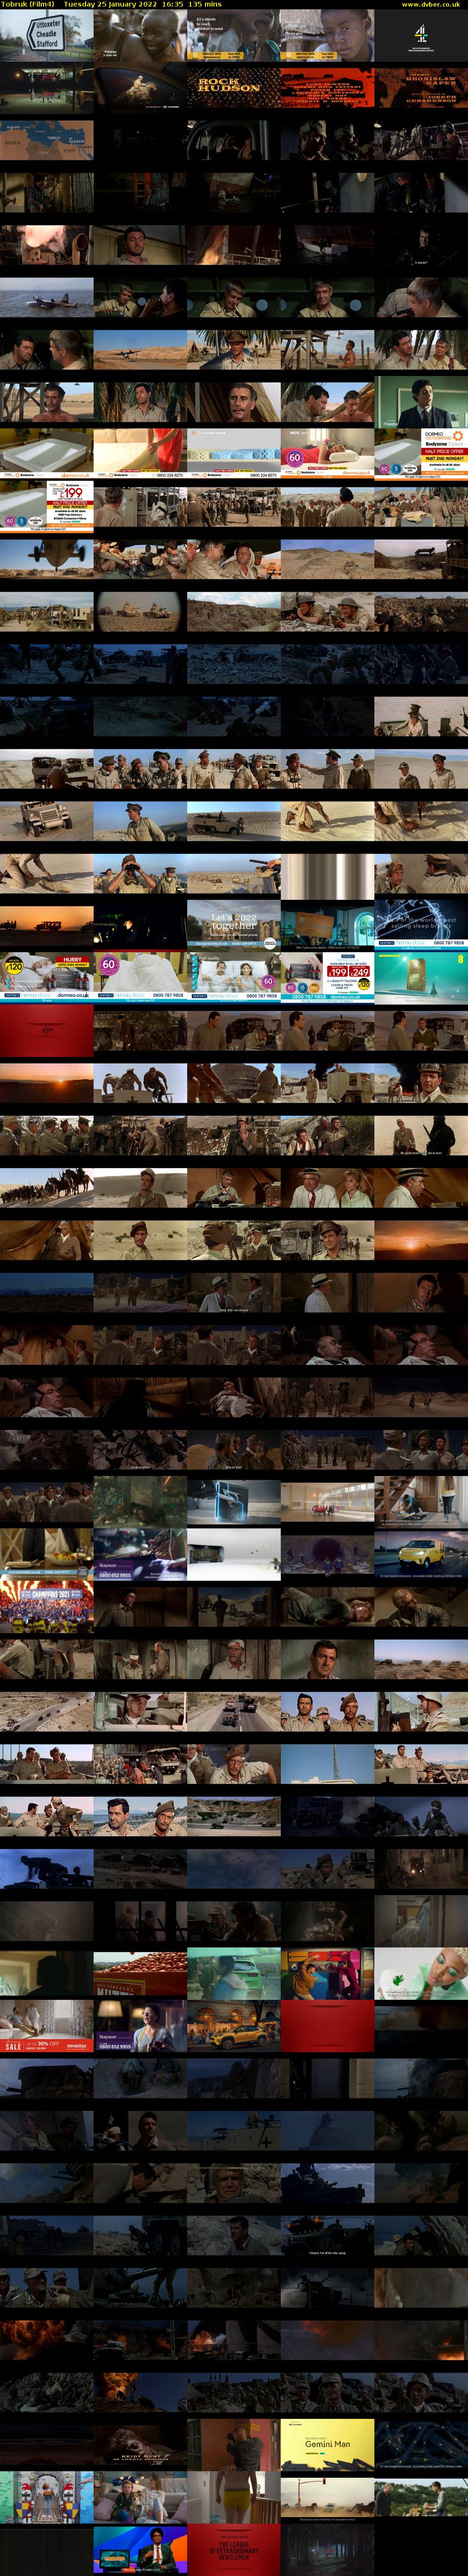 Tobruk (Film4) Tuesday 25 January 2022 16:35 - 18:50